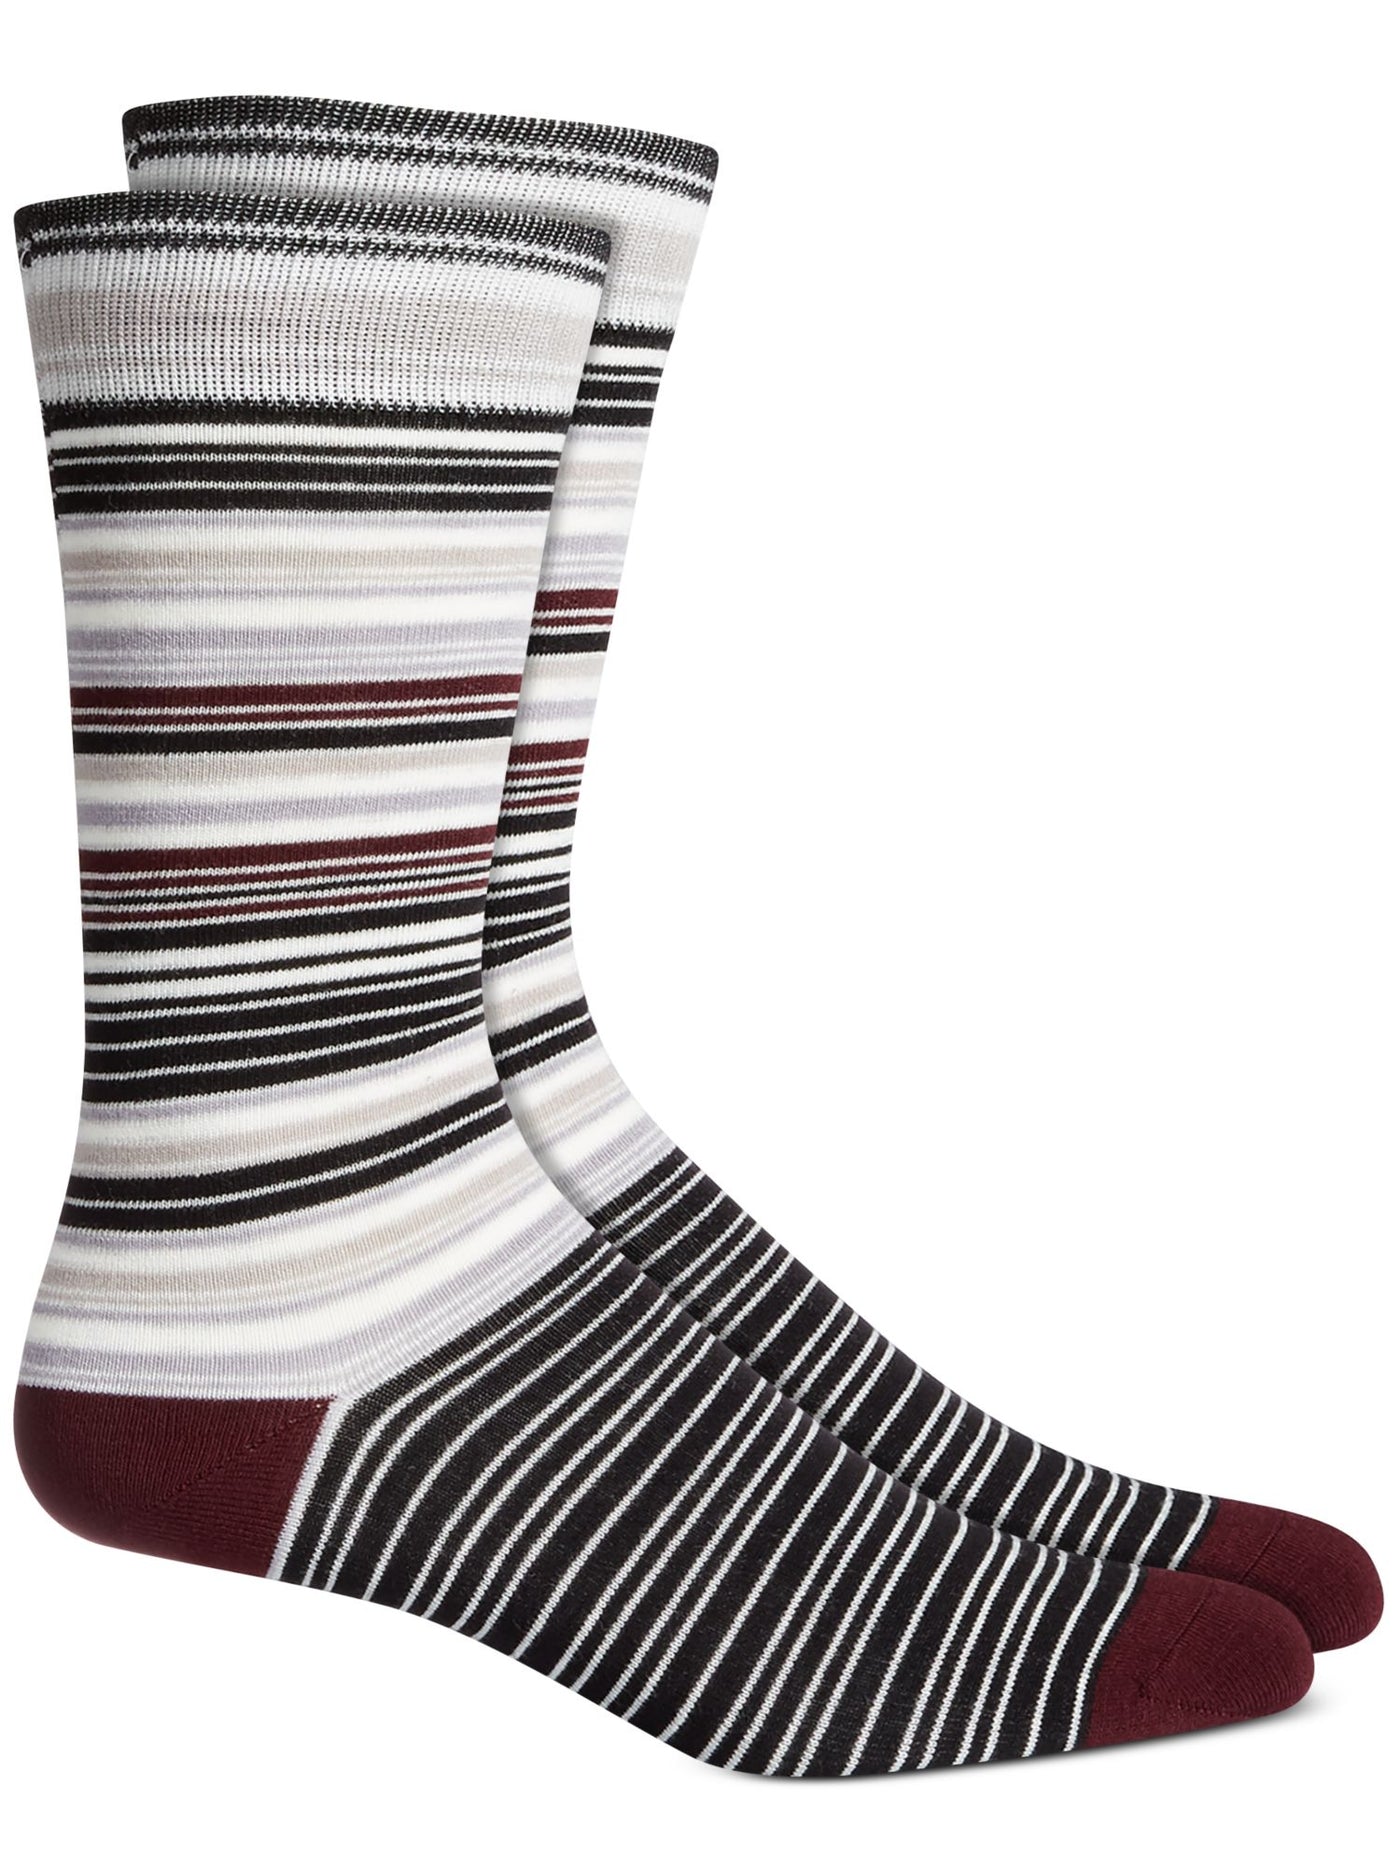 ALFATECH BY ALFANI Mens Port Maroon Striped Ribbed-Knit Moisture Wicking Seamless Dress Crew Socks 7-12